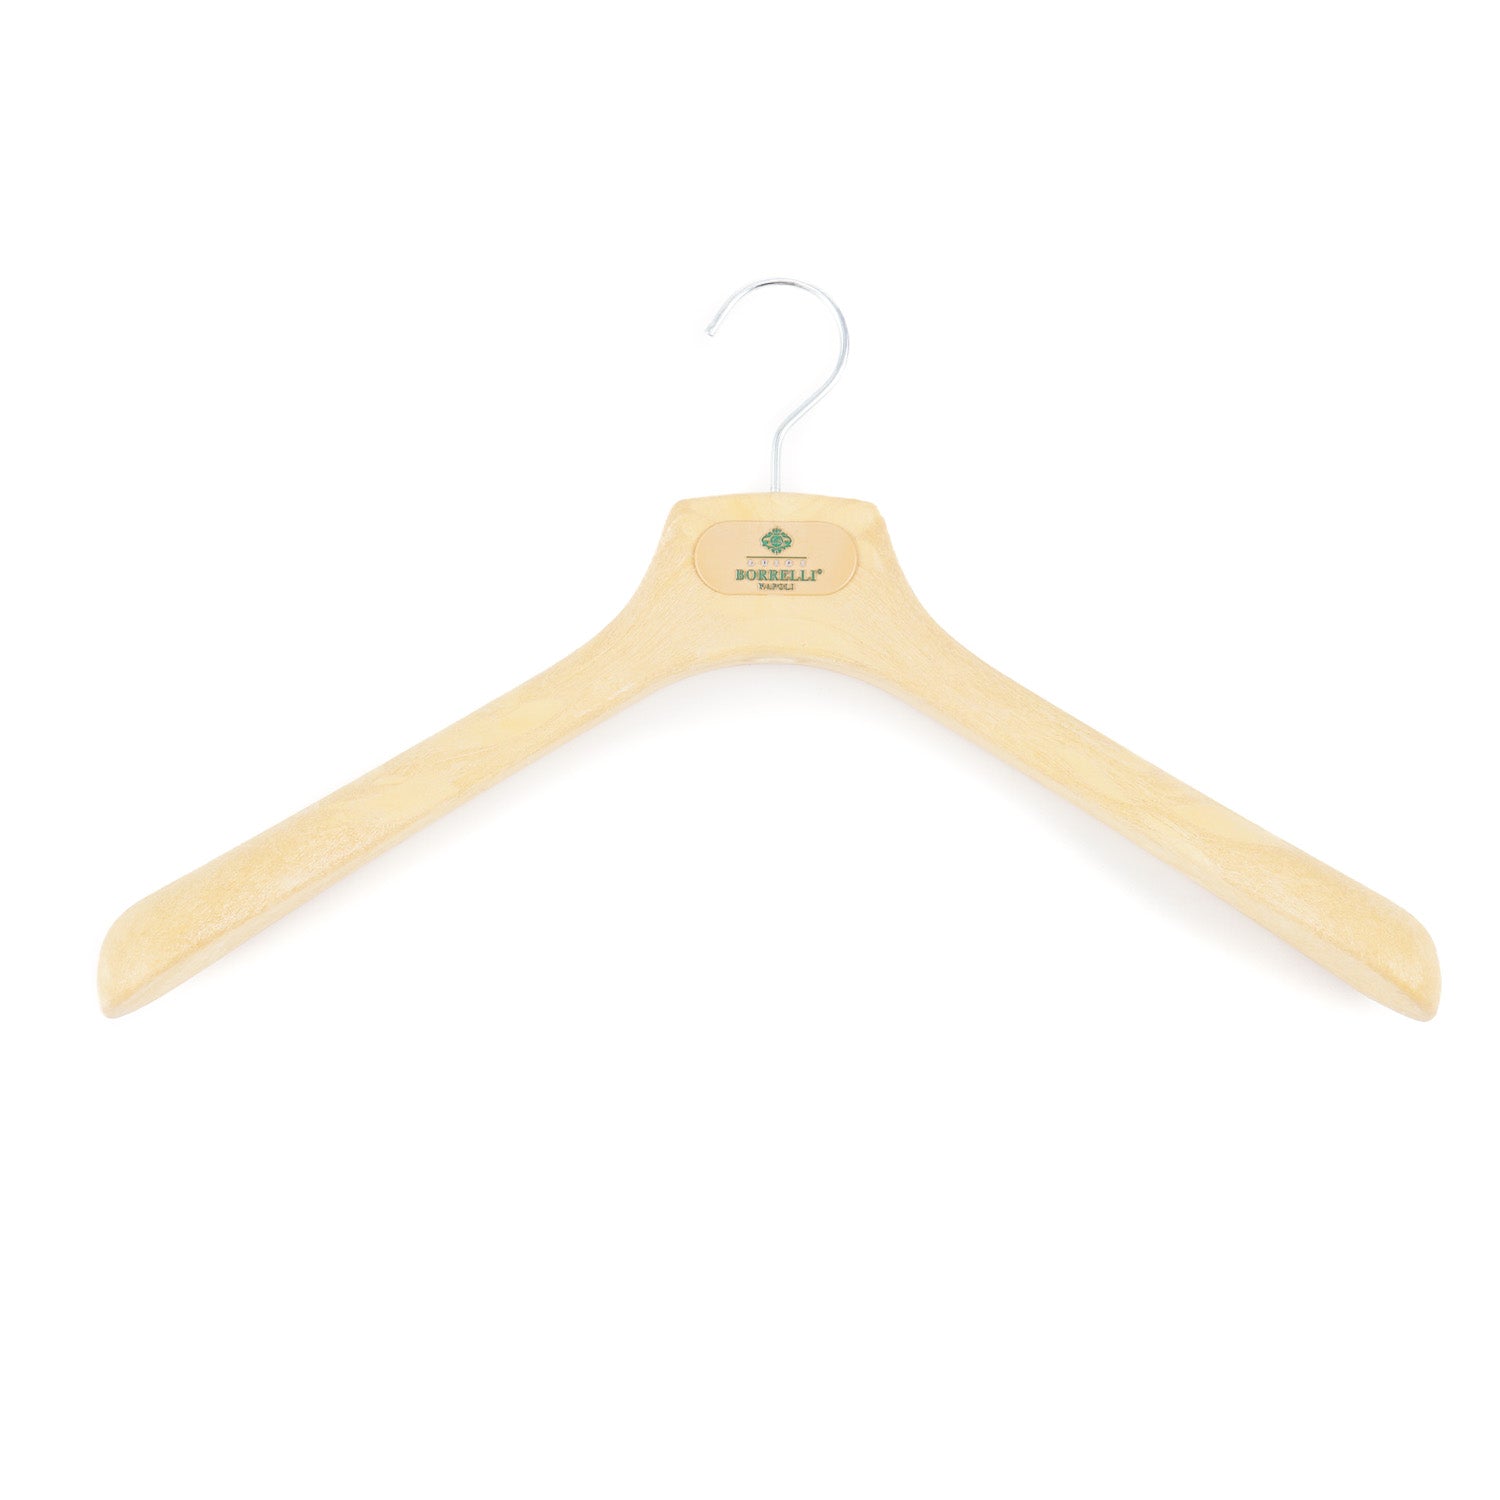 Borrelli Cotton Flight Jacket with Knit Details - Top Shelf Apparel